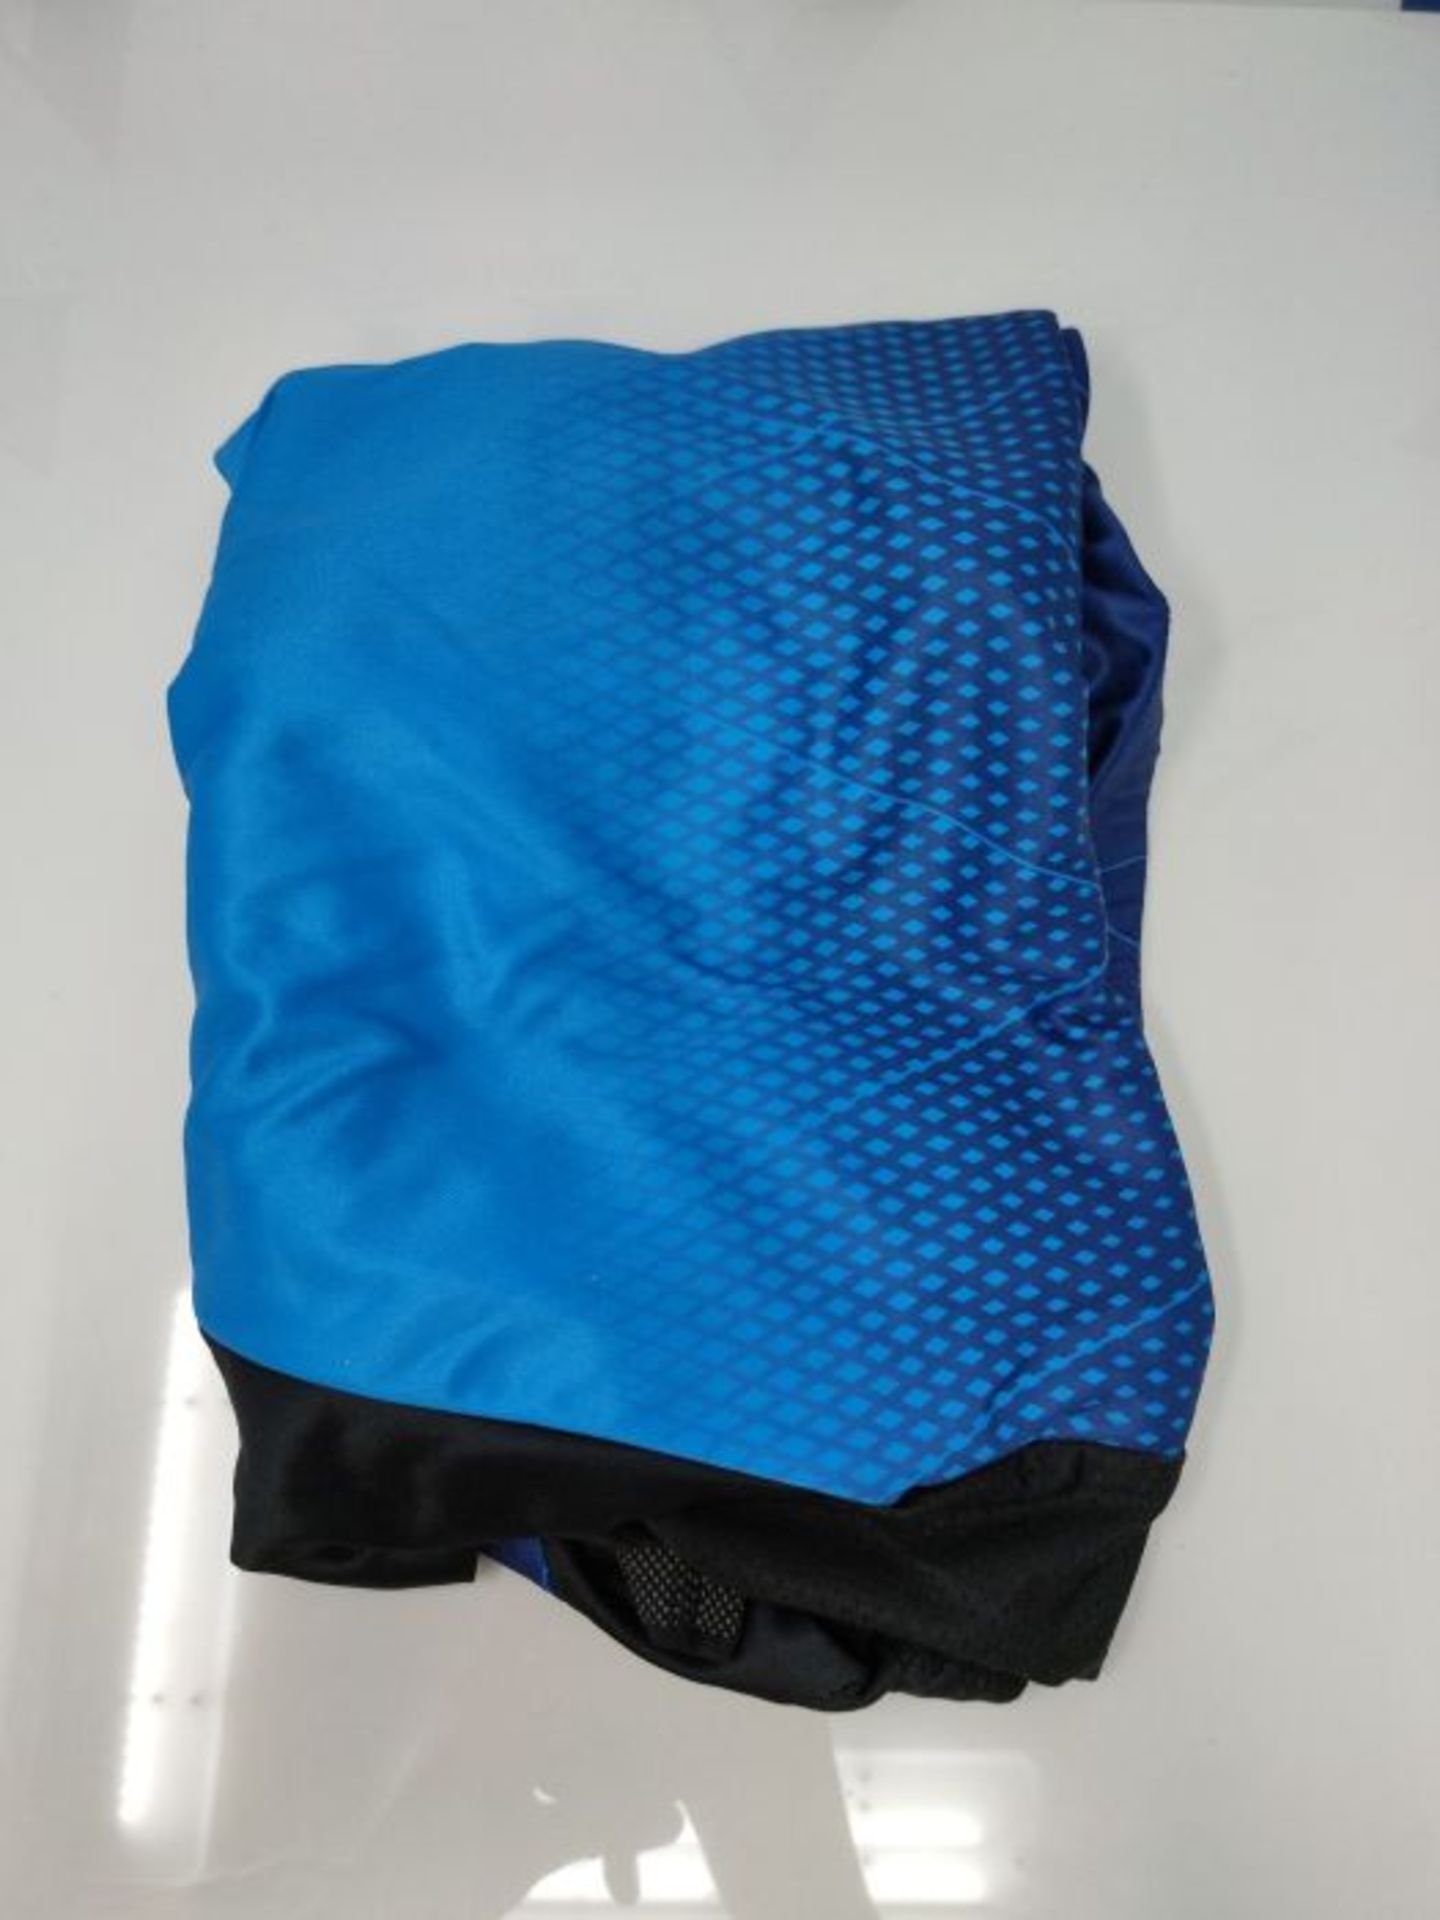 Altura Peloton Short Sleeve Jersey - Prism Blue/Black, X-Large - Image 4 of 4